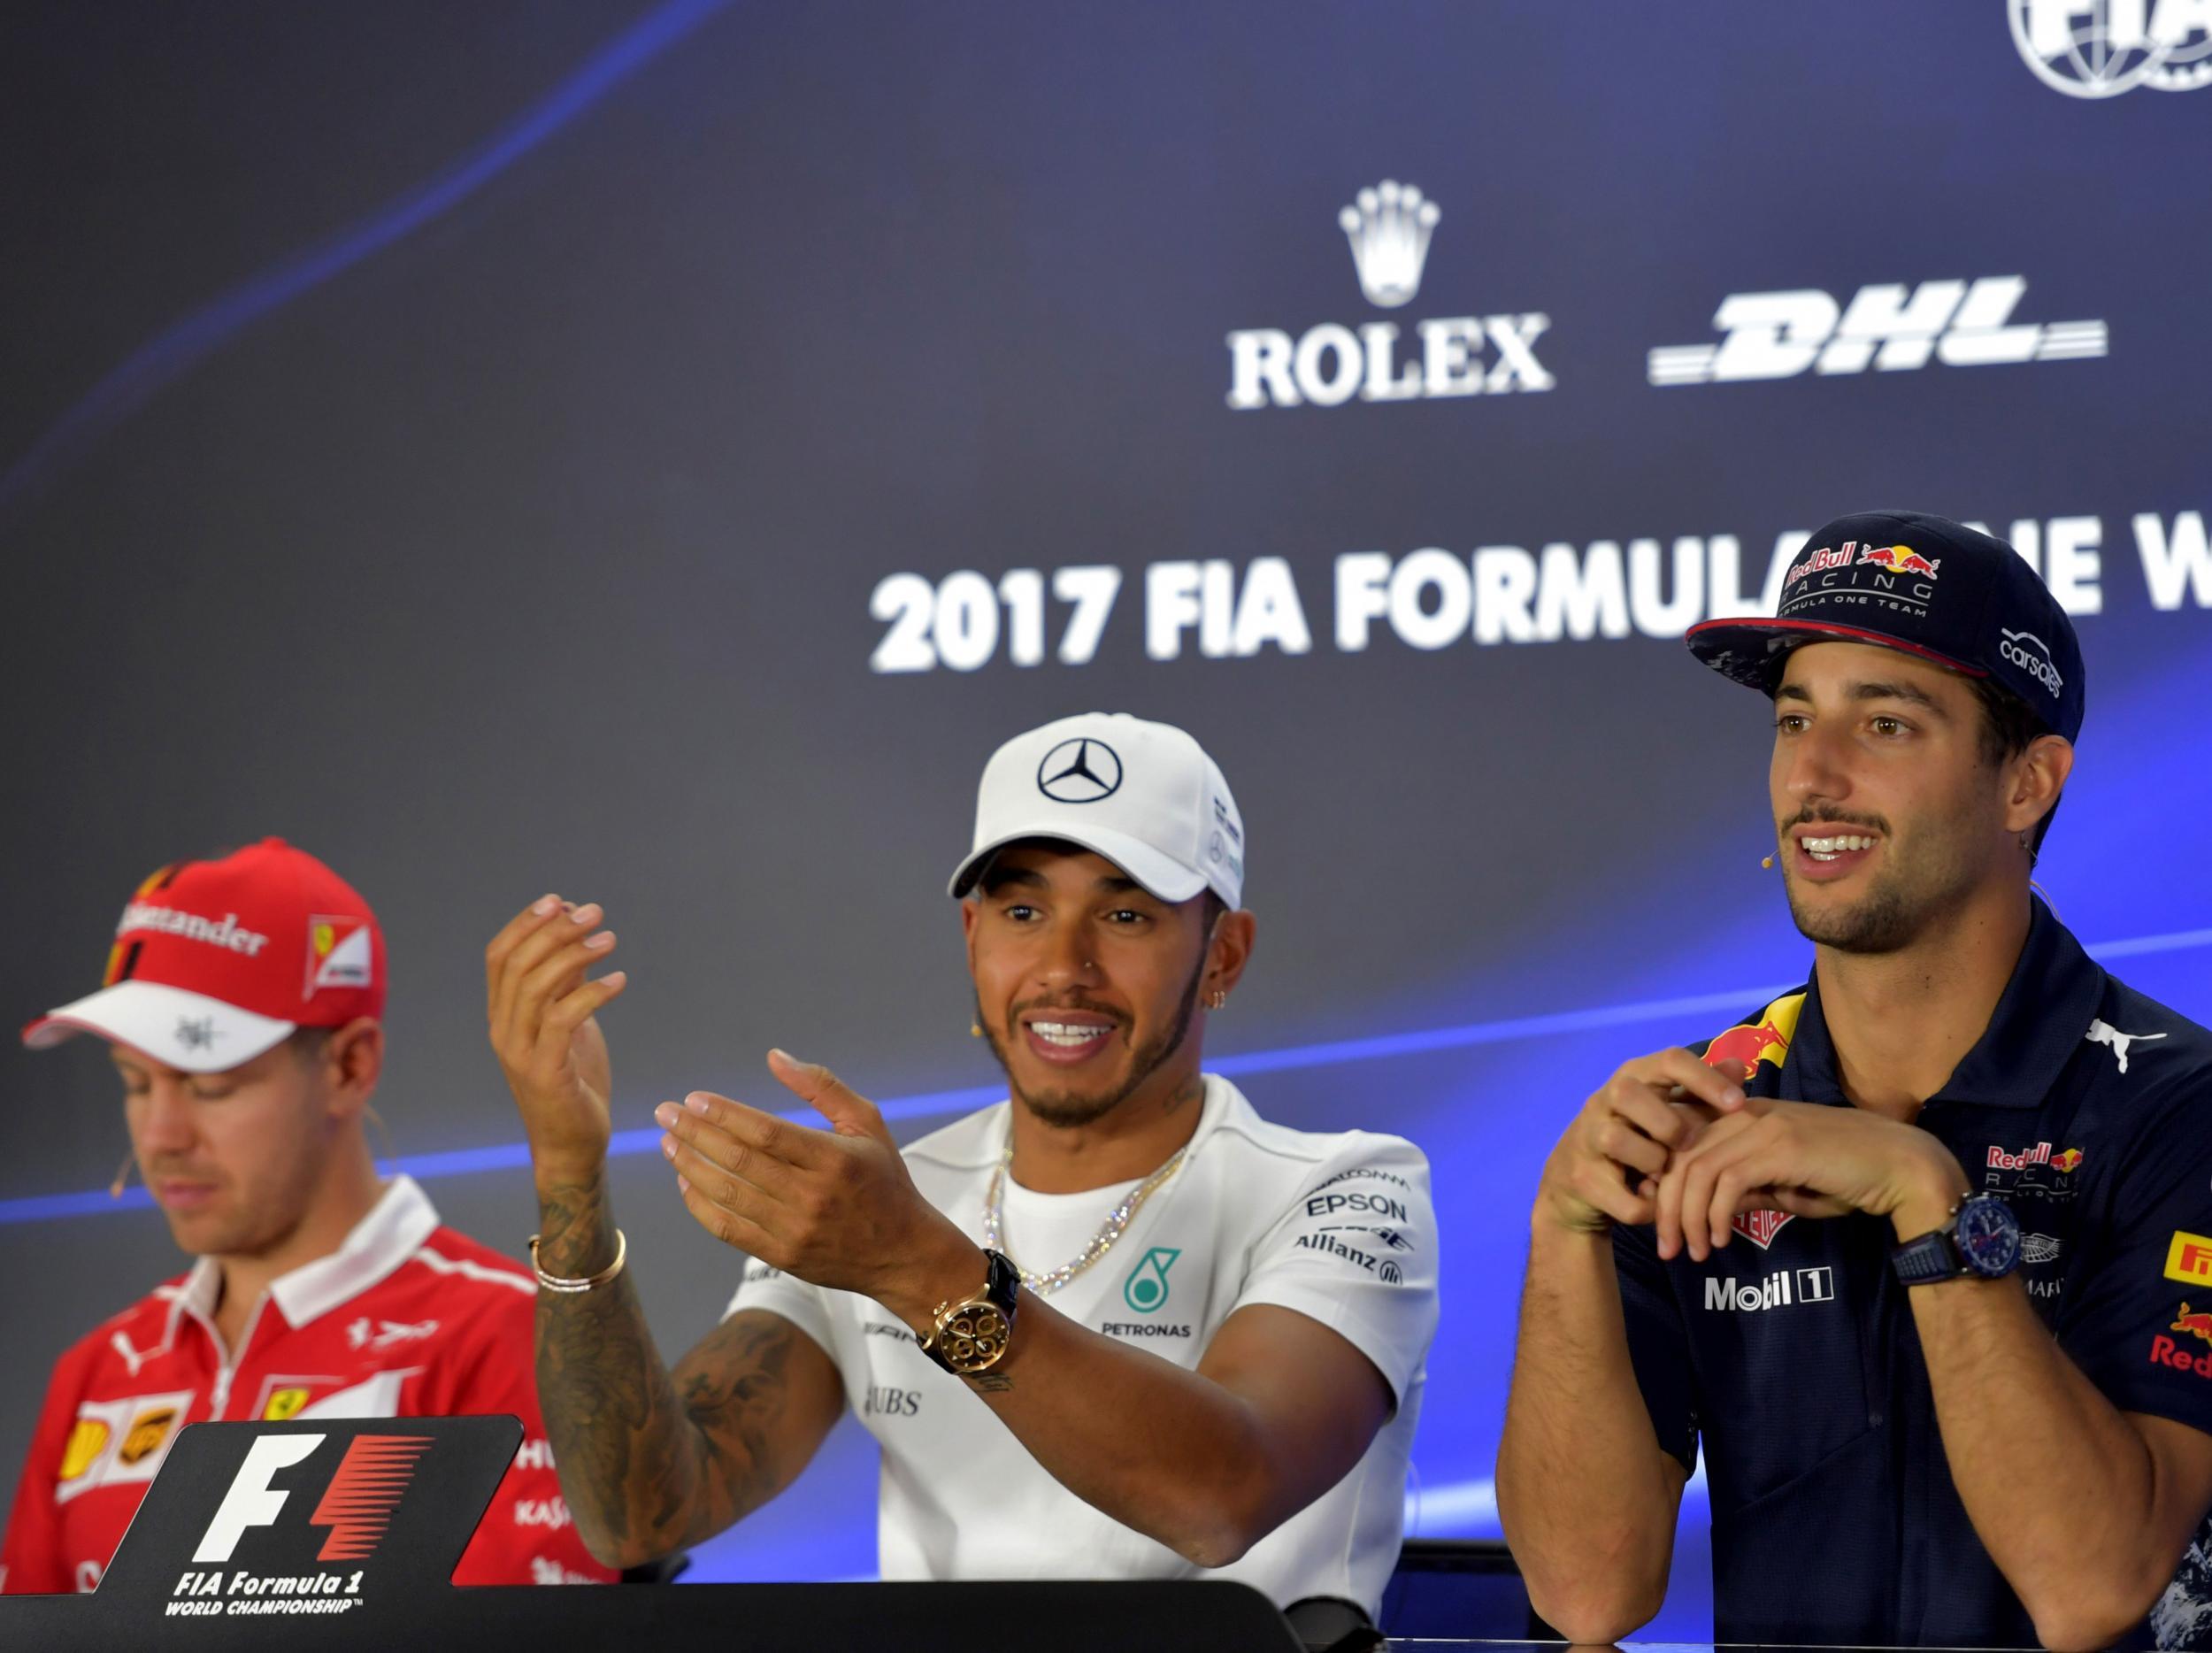 &#13;
Hamilton, Vettel and Ricciardo conducted a jovial press conference on Thursday &#13;